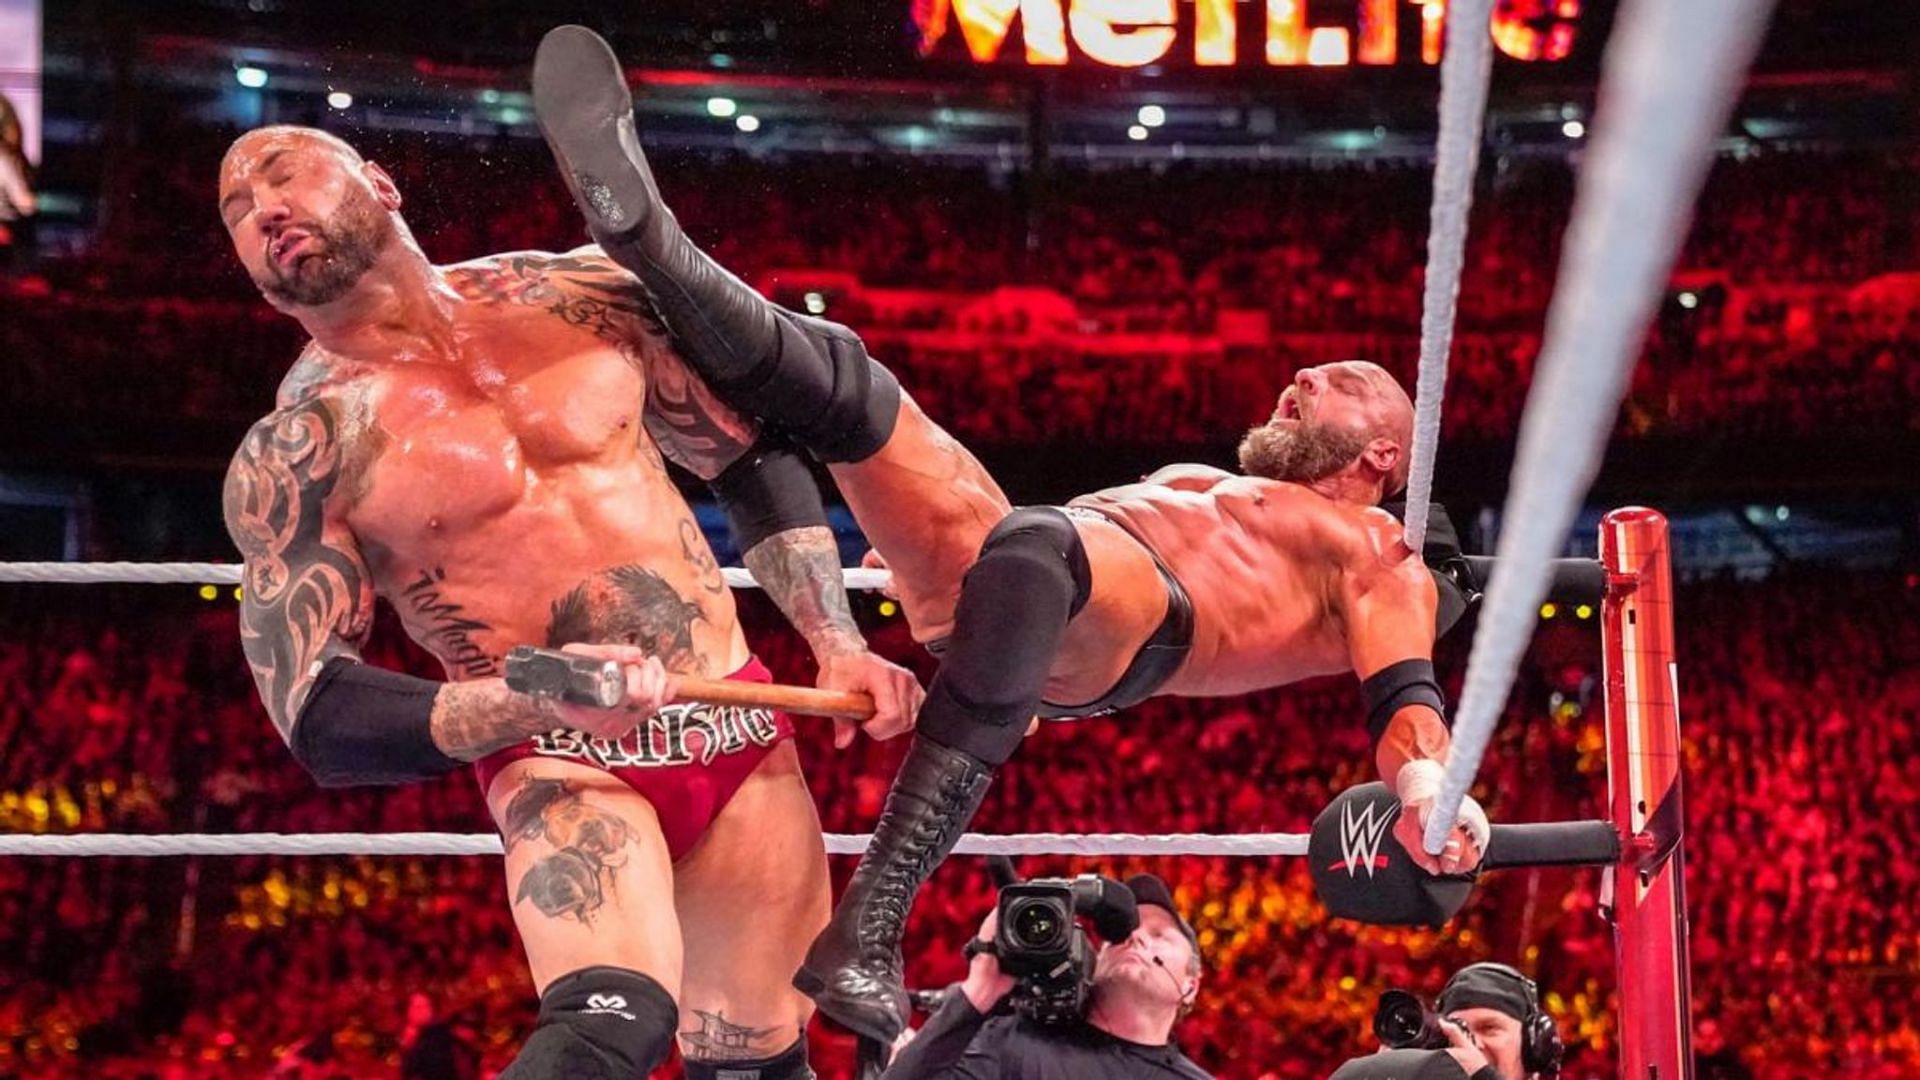 Batista and Triple H battled at WrestleMania 35